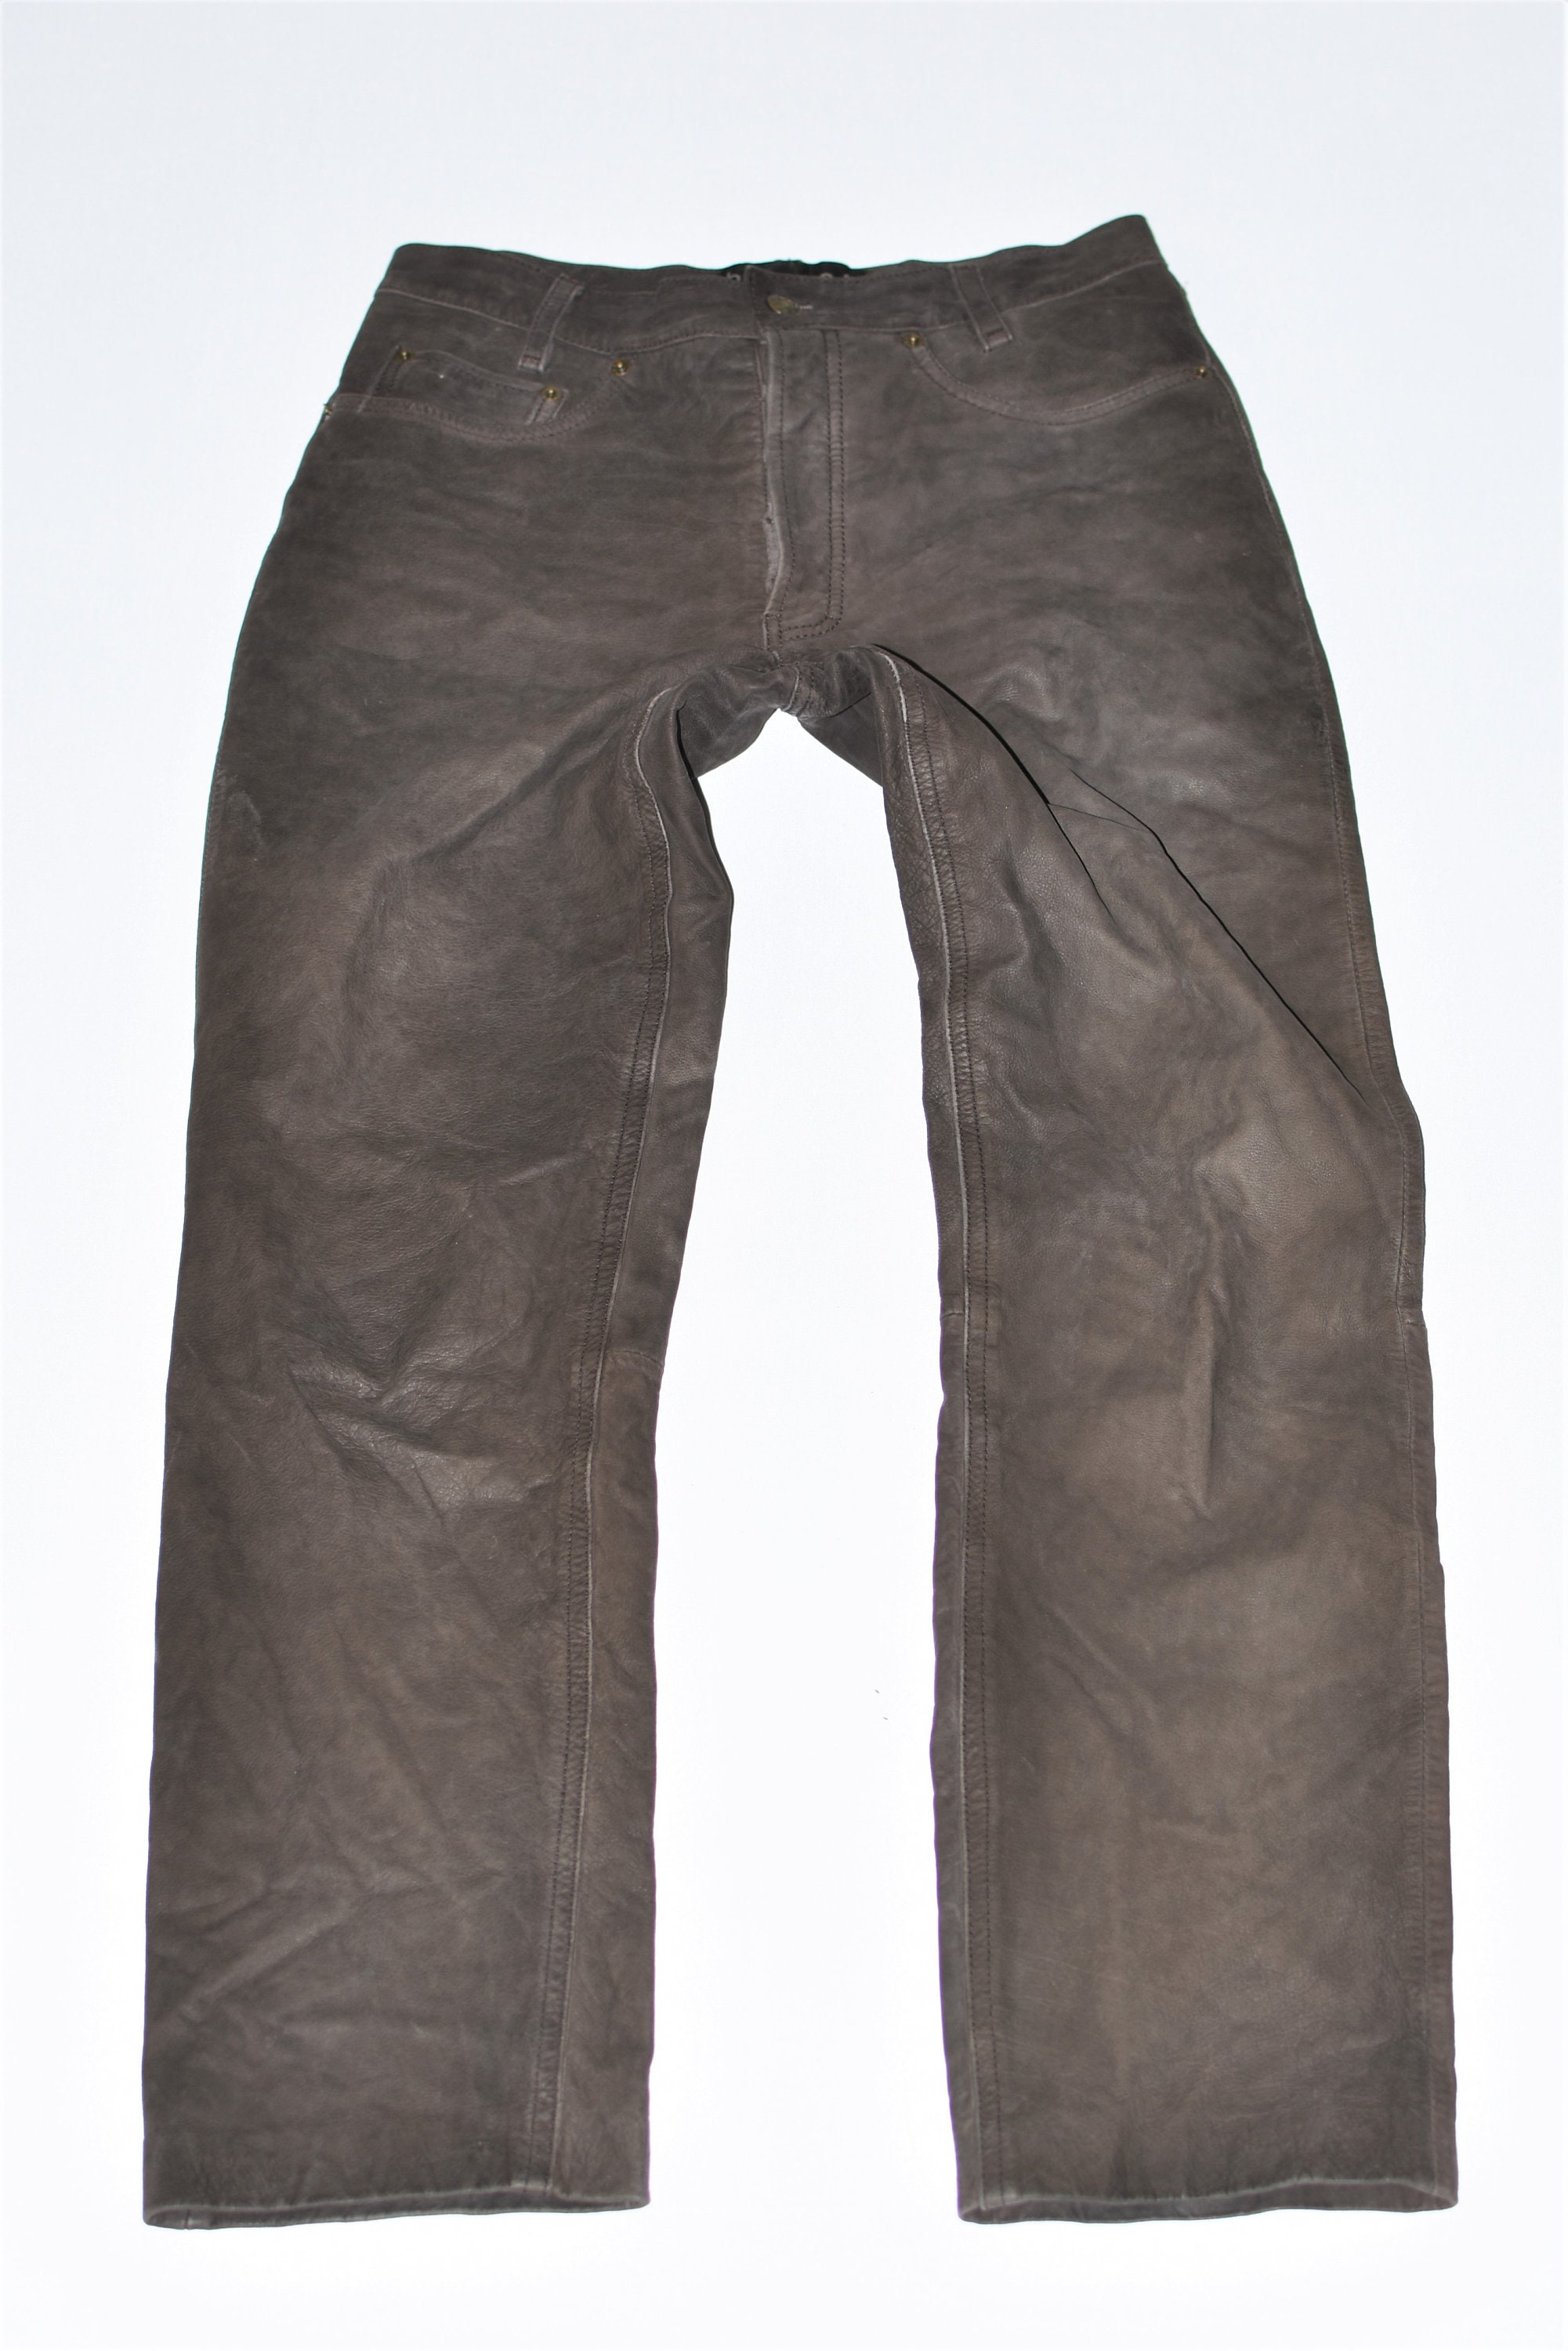 Vintage HENSON&HENSON Men's Real Leather Biker Motorcycle Brown Pants  Trousers Size W29 L29 